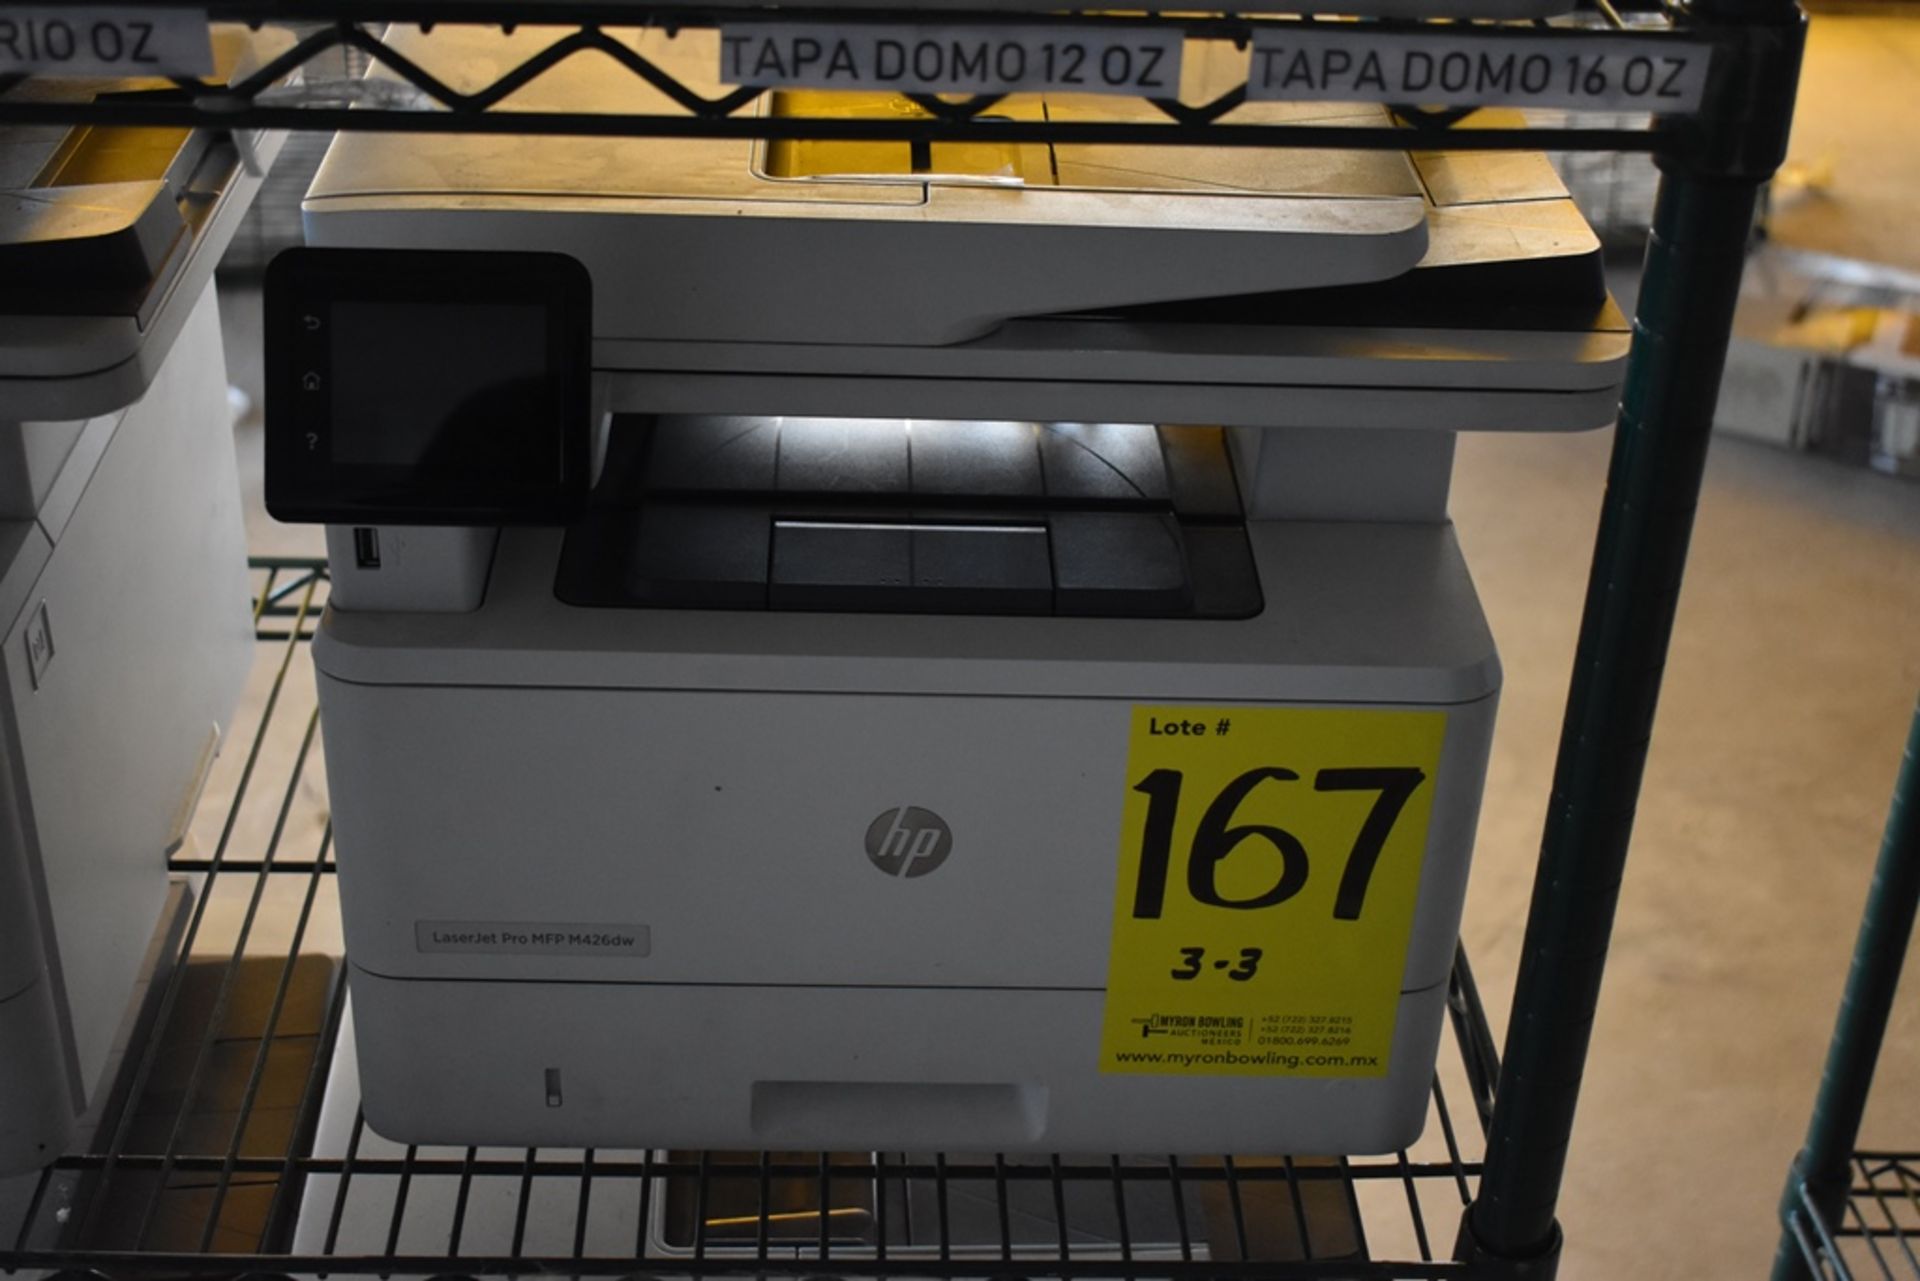 3 impresoras multifuncional marca HP, Modelo: LaserJet Pro MFP M426fdw - Image 14 of 21